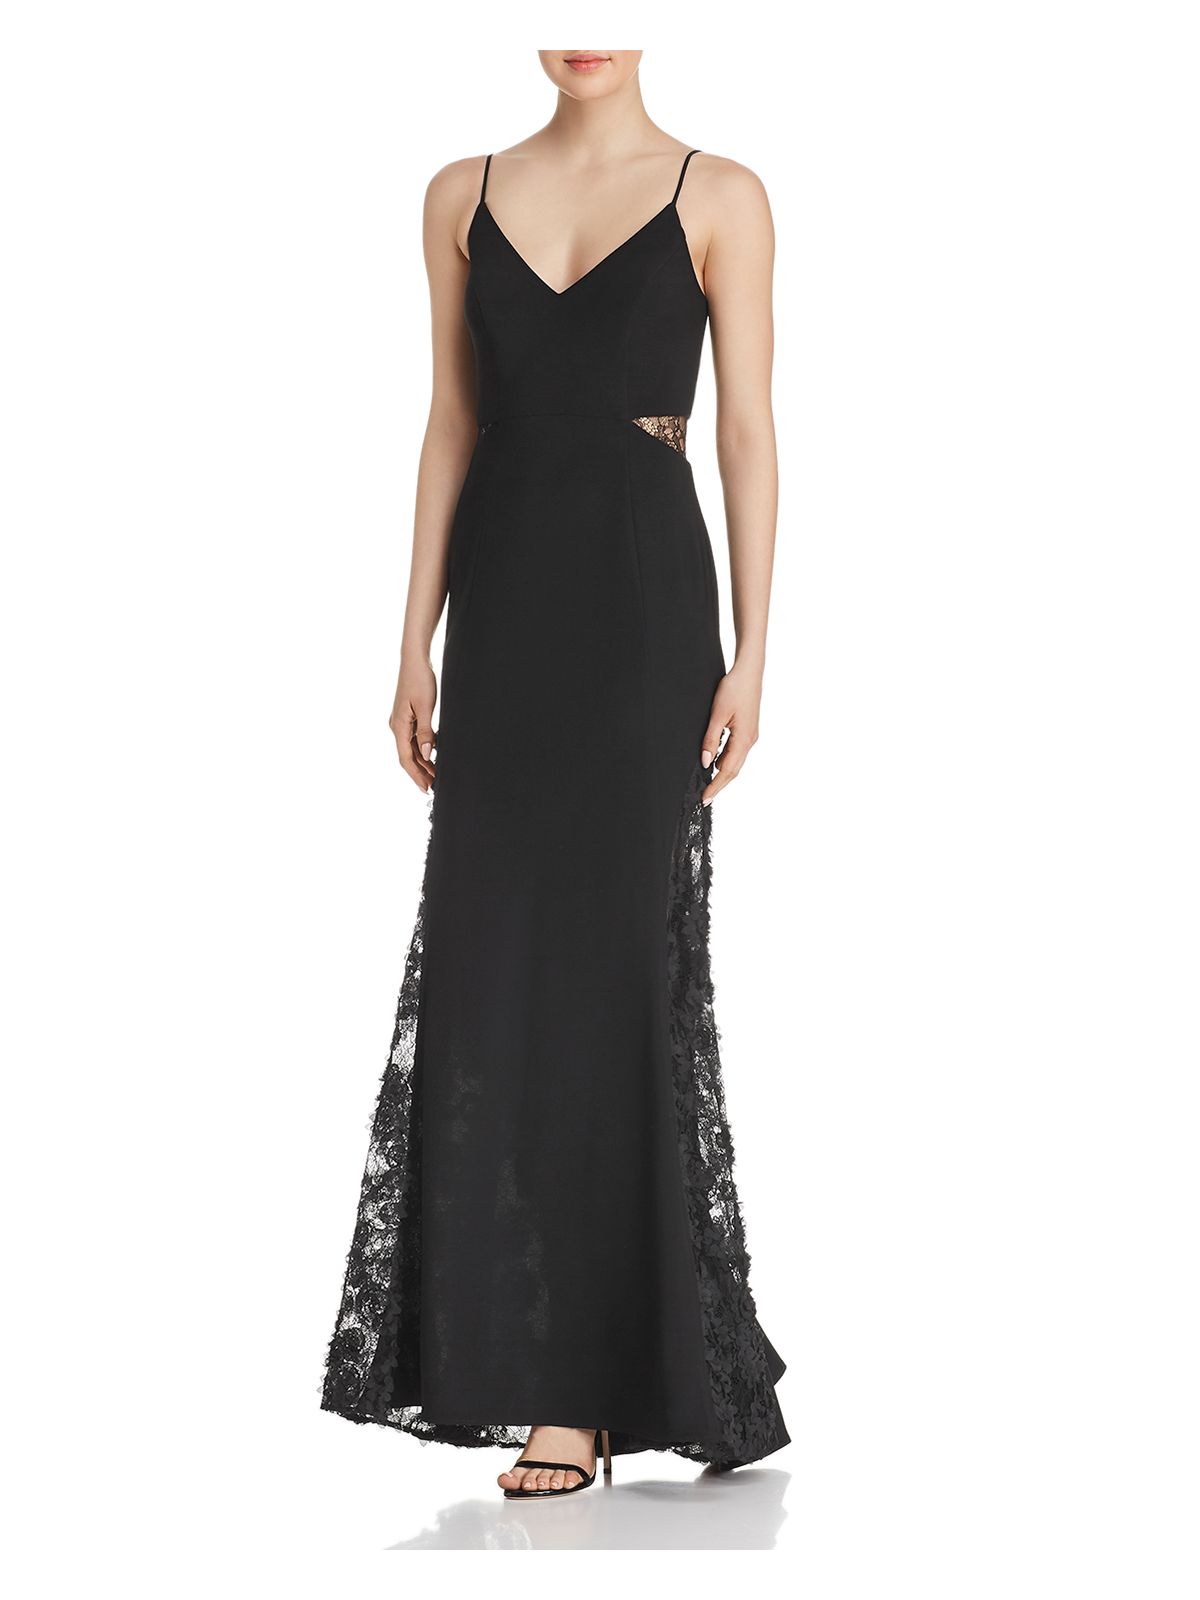 AVERY G Womens Black Spaghetti Strap Full-Length Fit + Flare Evening Dress 12